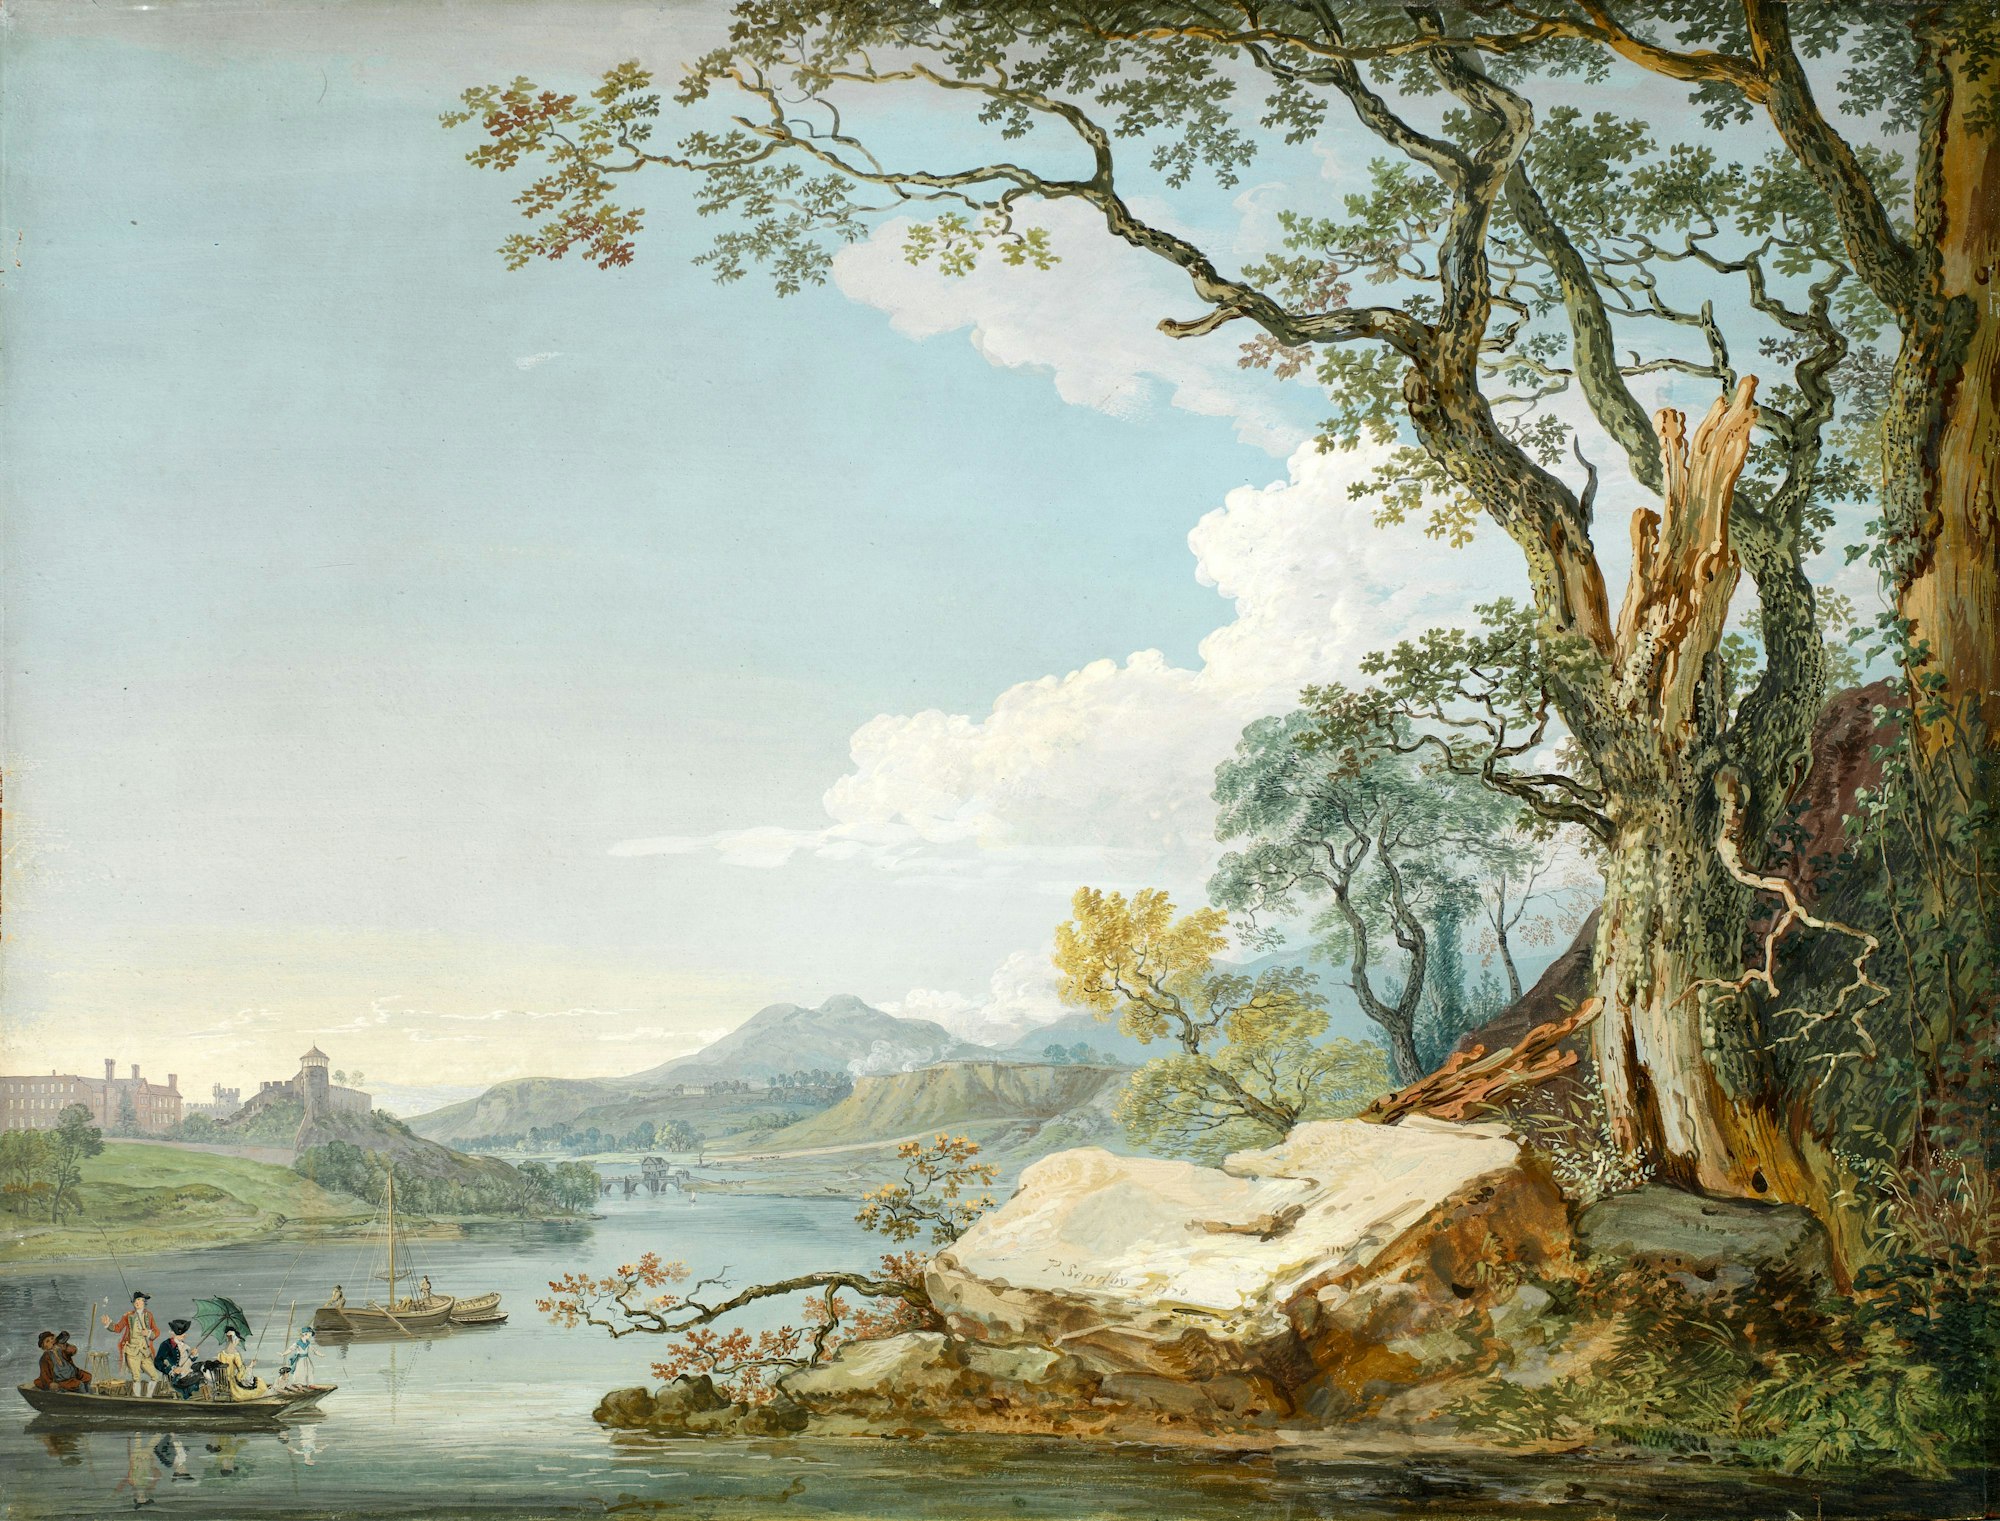 The River Severn at Shrewsbury, Shropshire, 1770 by Paul Sandby